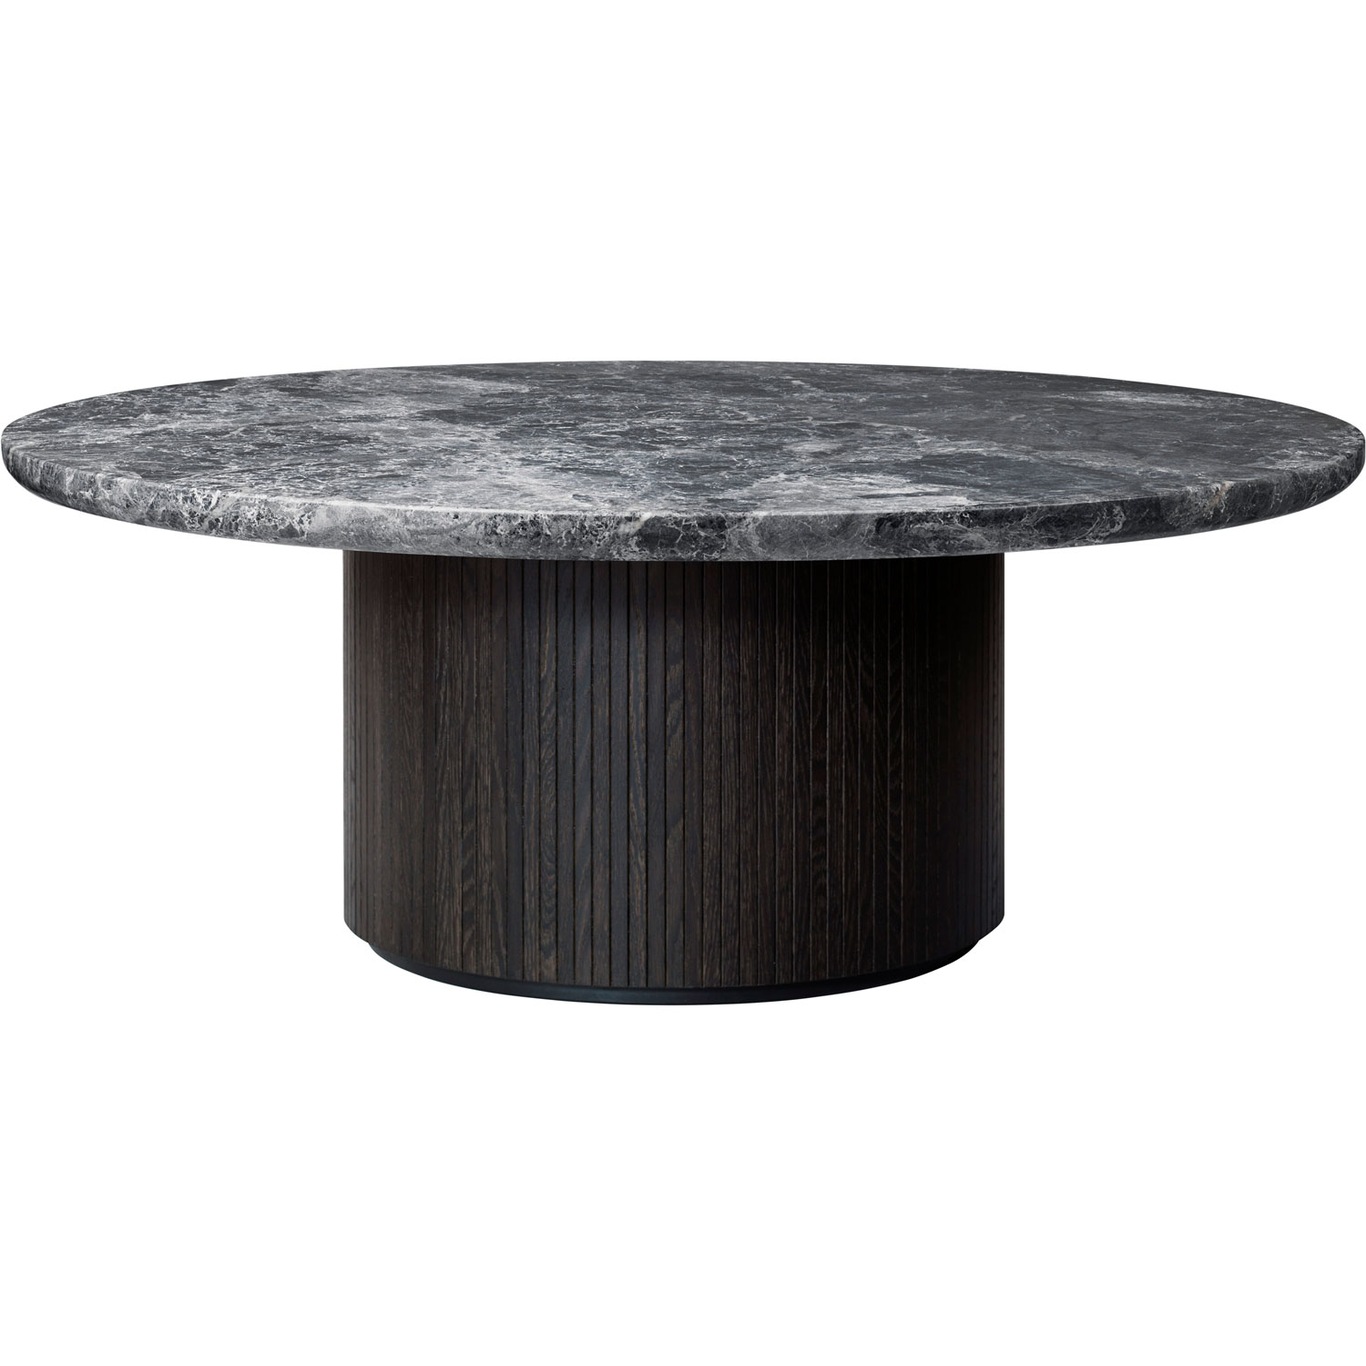 Moon Coffee Table Round Ø150 H45, Brown Black / Grey Marble